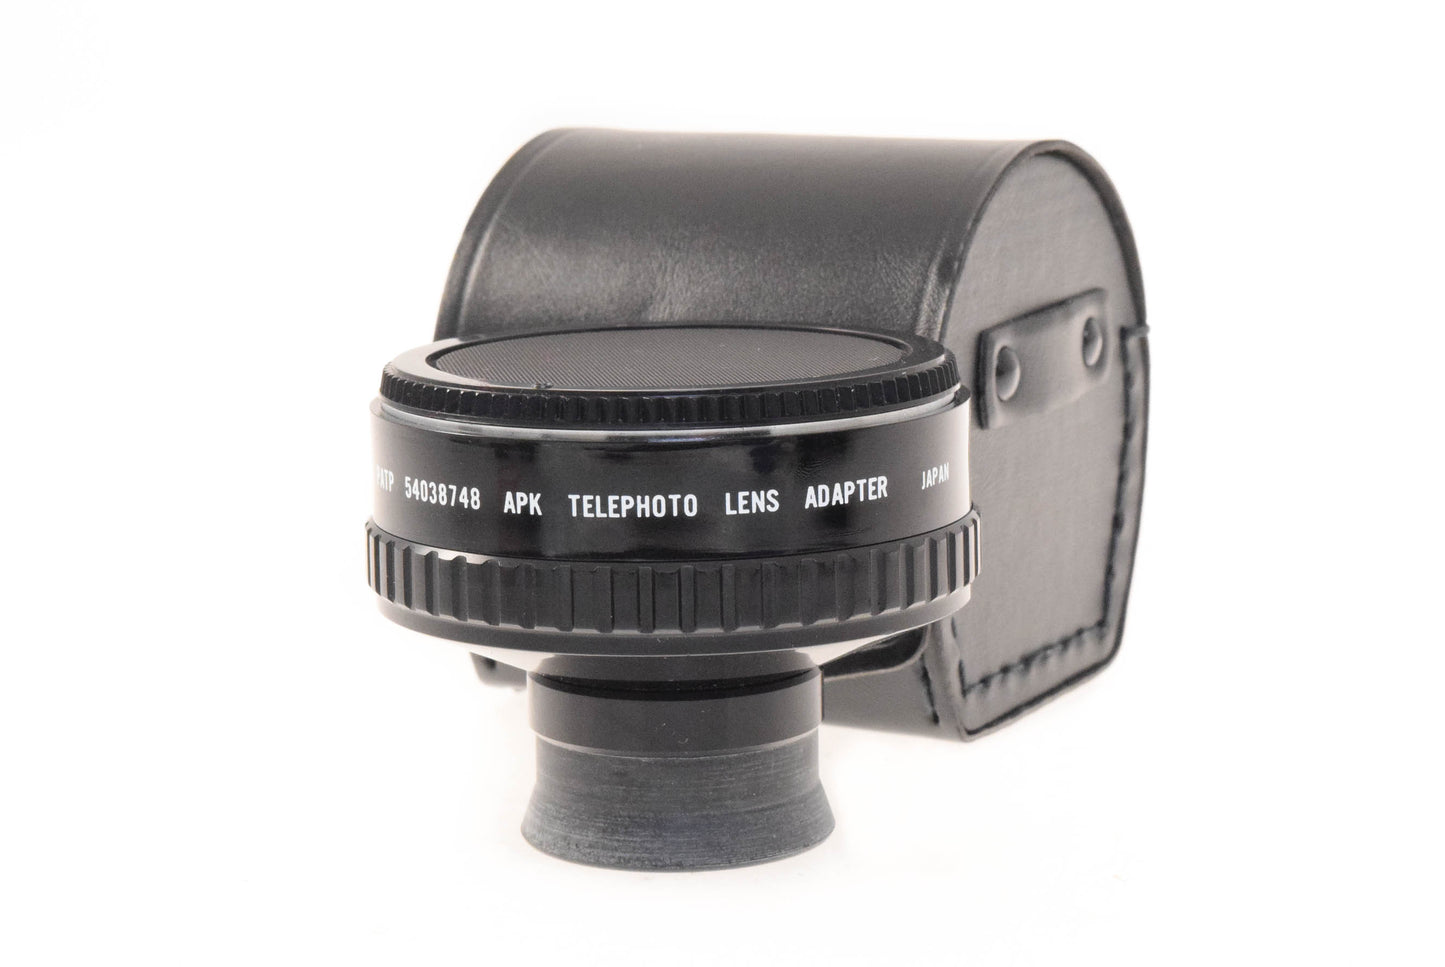 Hama APK Telephoto Lens Adapter - Accessory